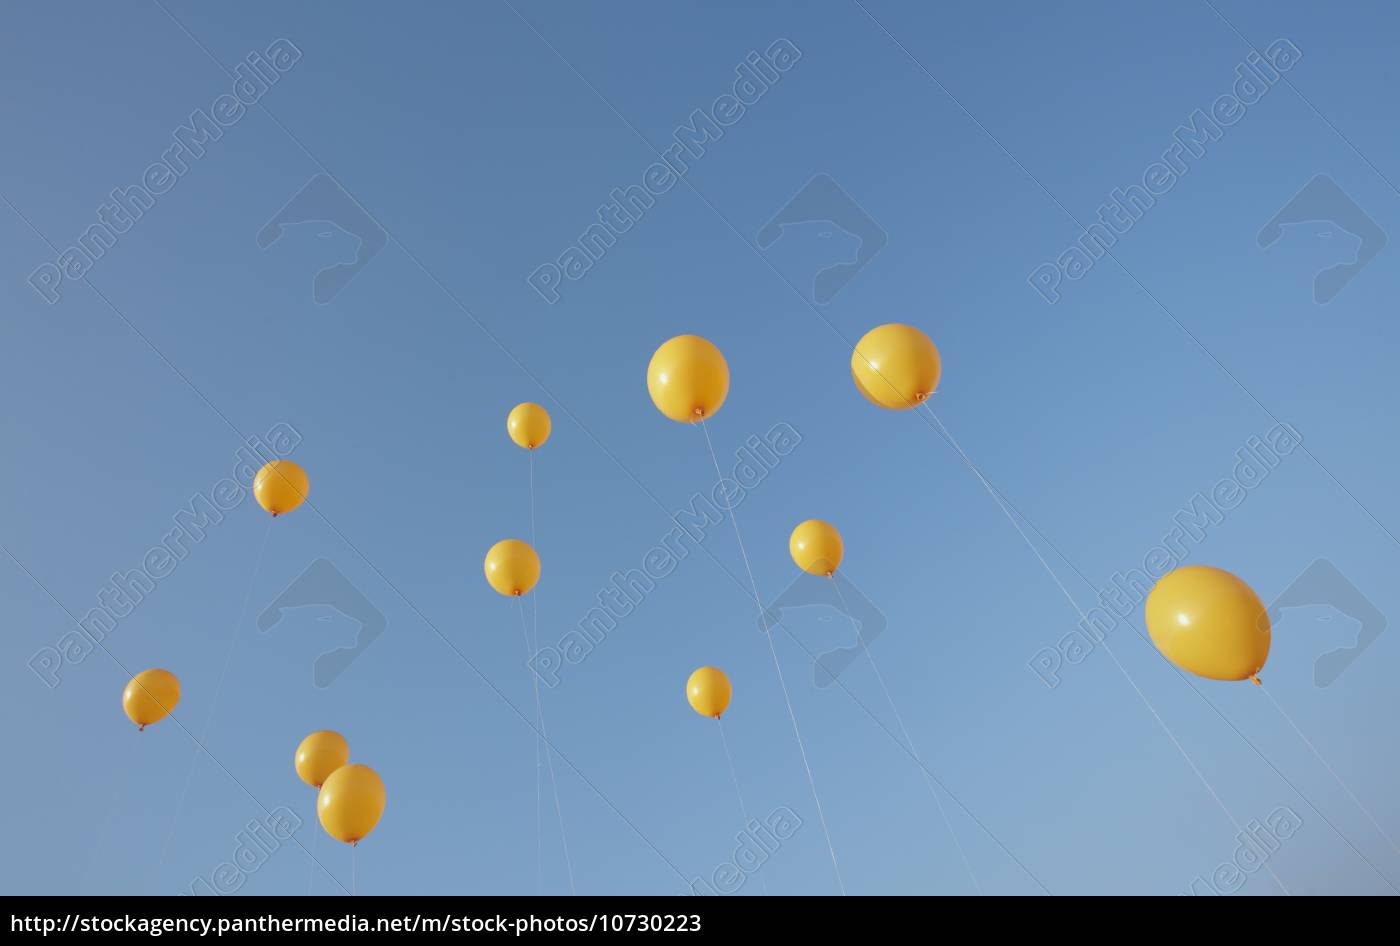 palloncini gialli nel cielo blu - Stockphoto #10730223